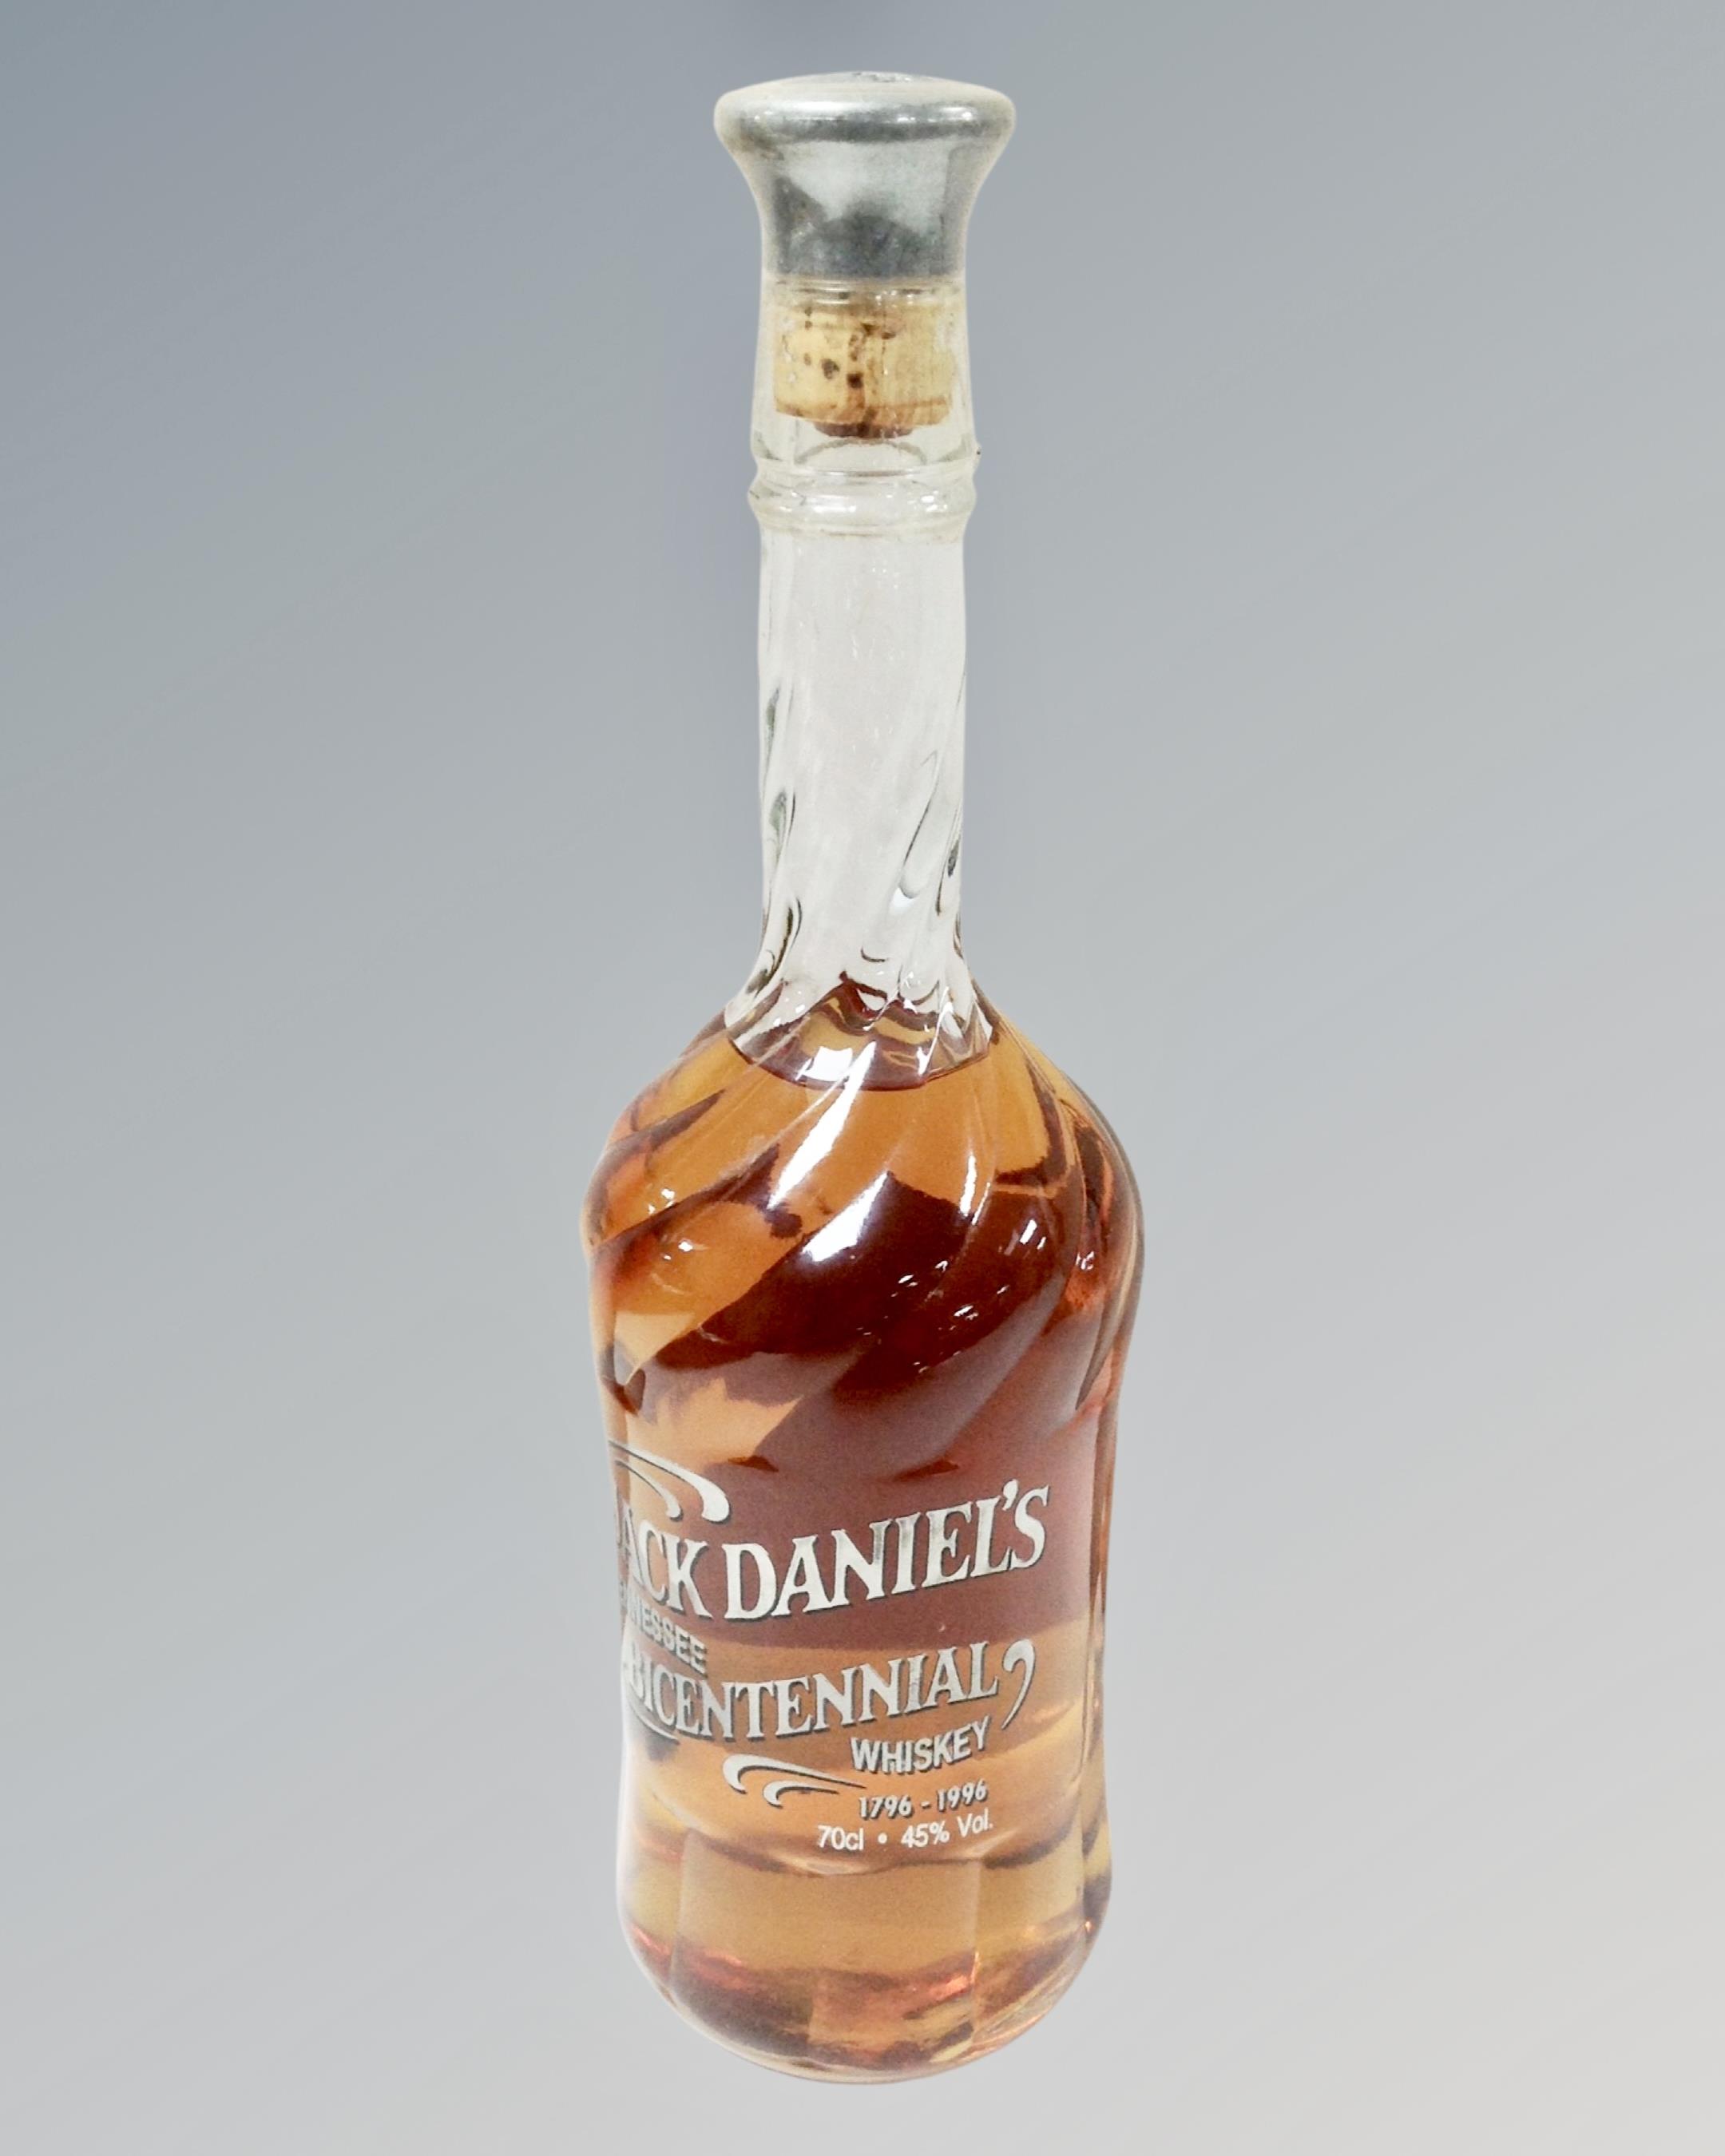 A bottle of Jack Daniels Tennessee Bicentennial whisky 1796-1996, 70cl 45% vol.